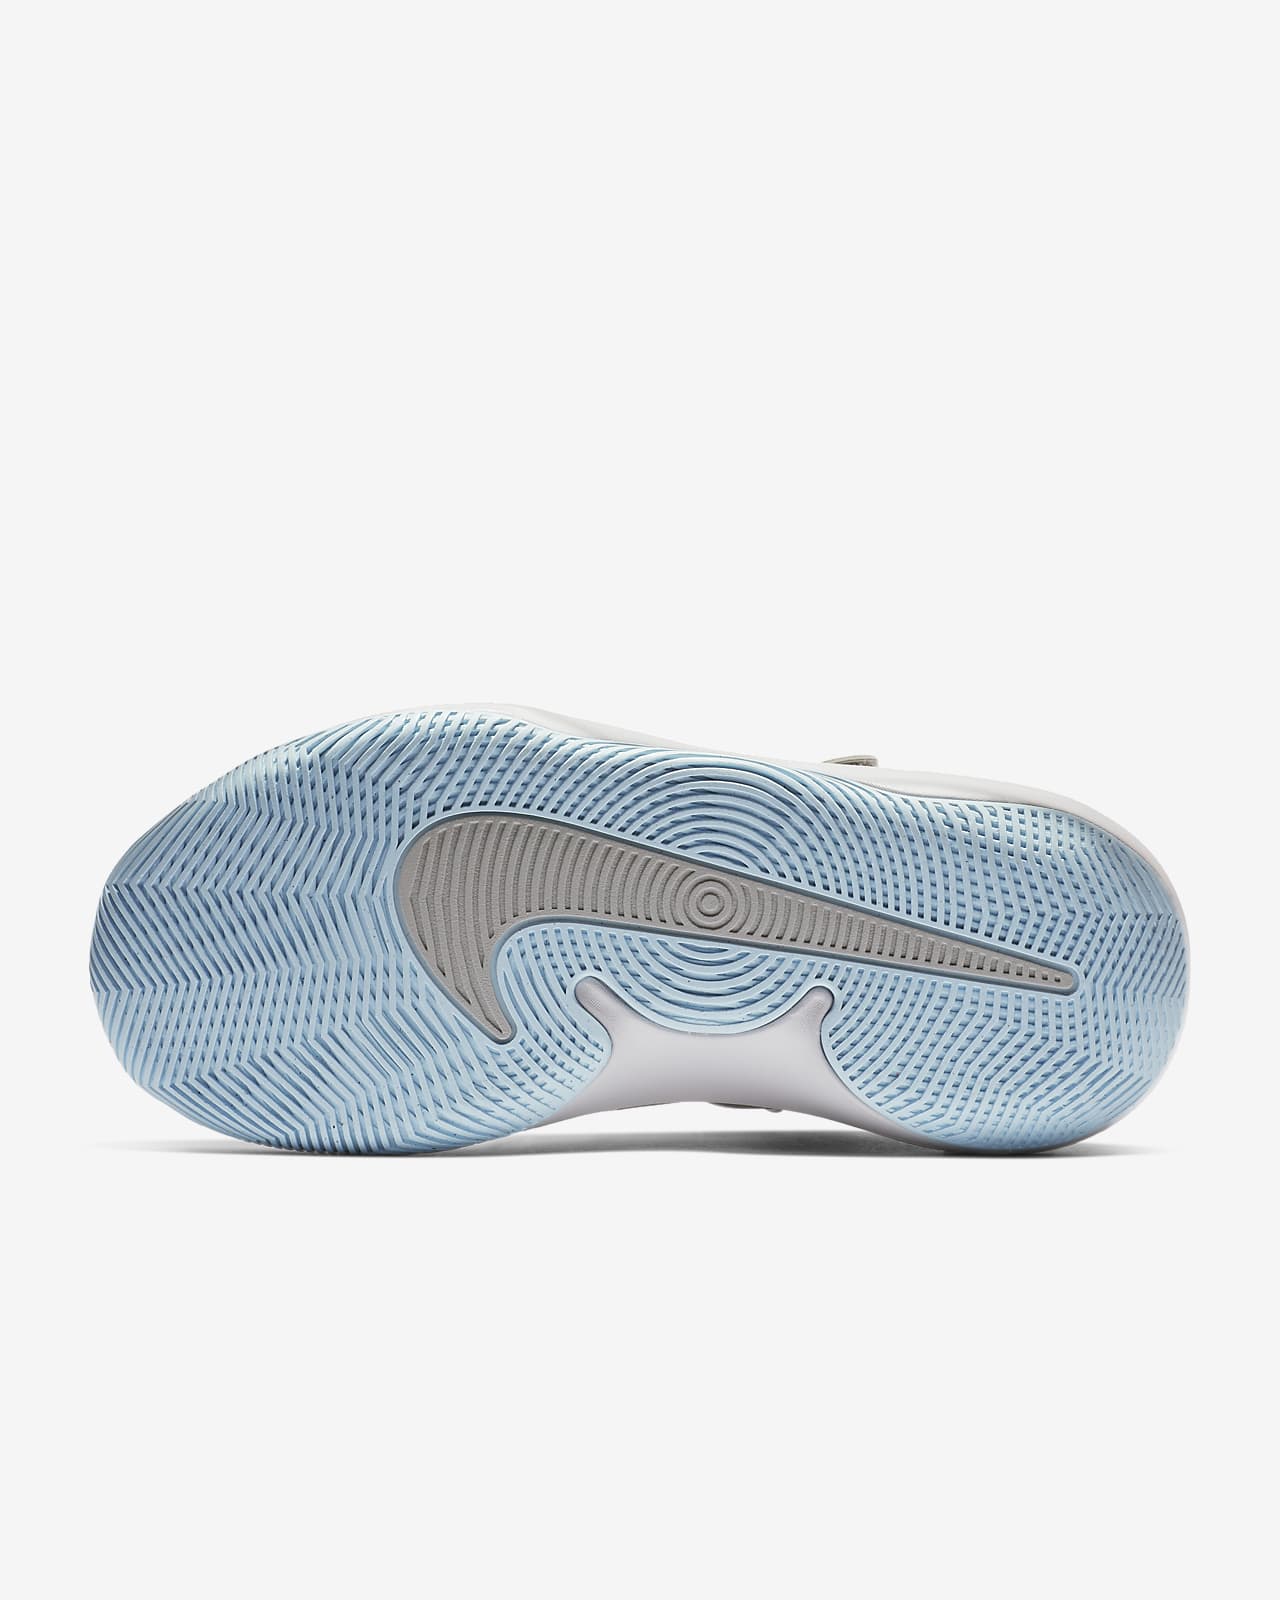 Nike Air Precision II FlyEase (Extra-Wide) Women's Basketball Shoe. 